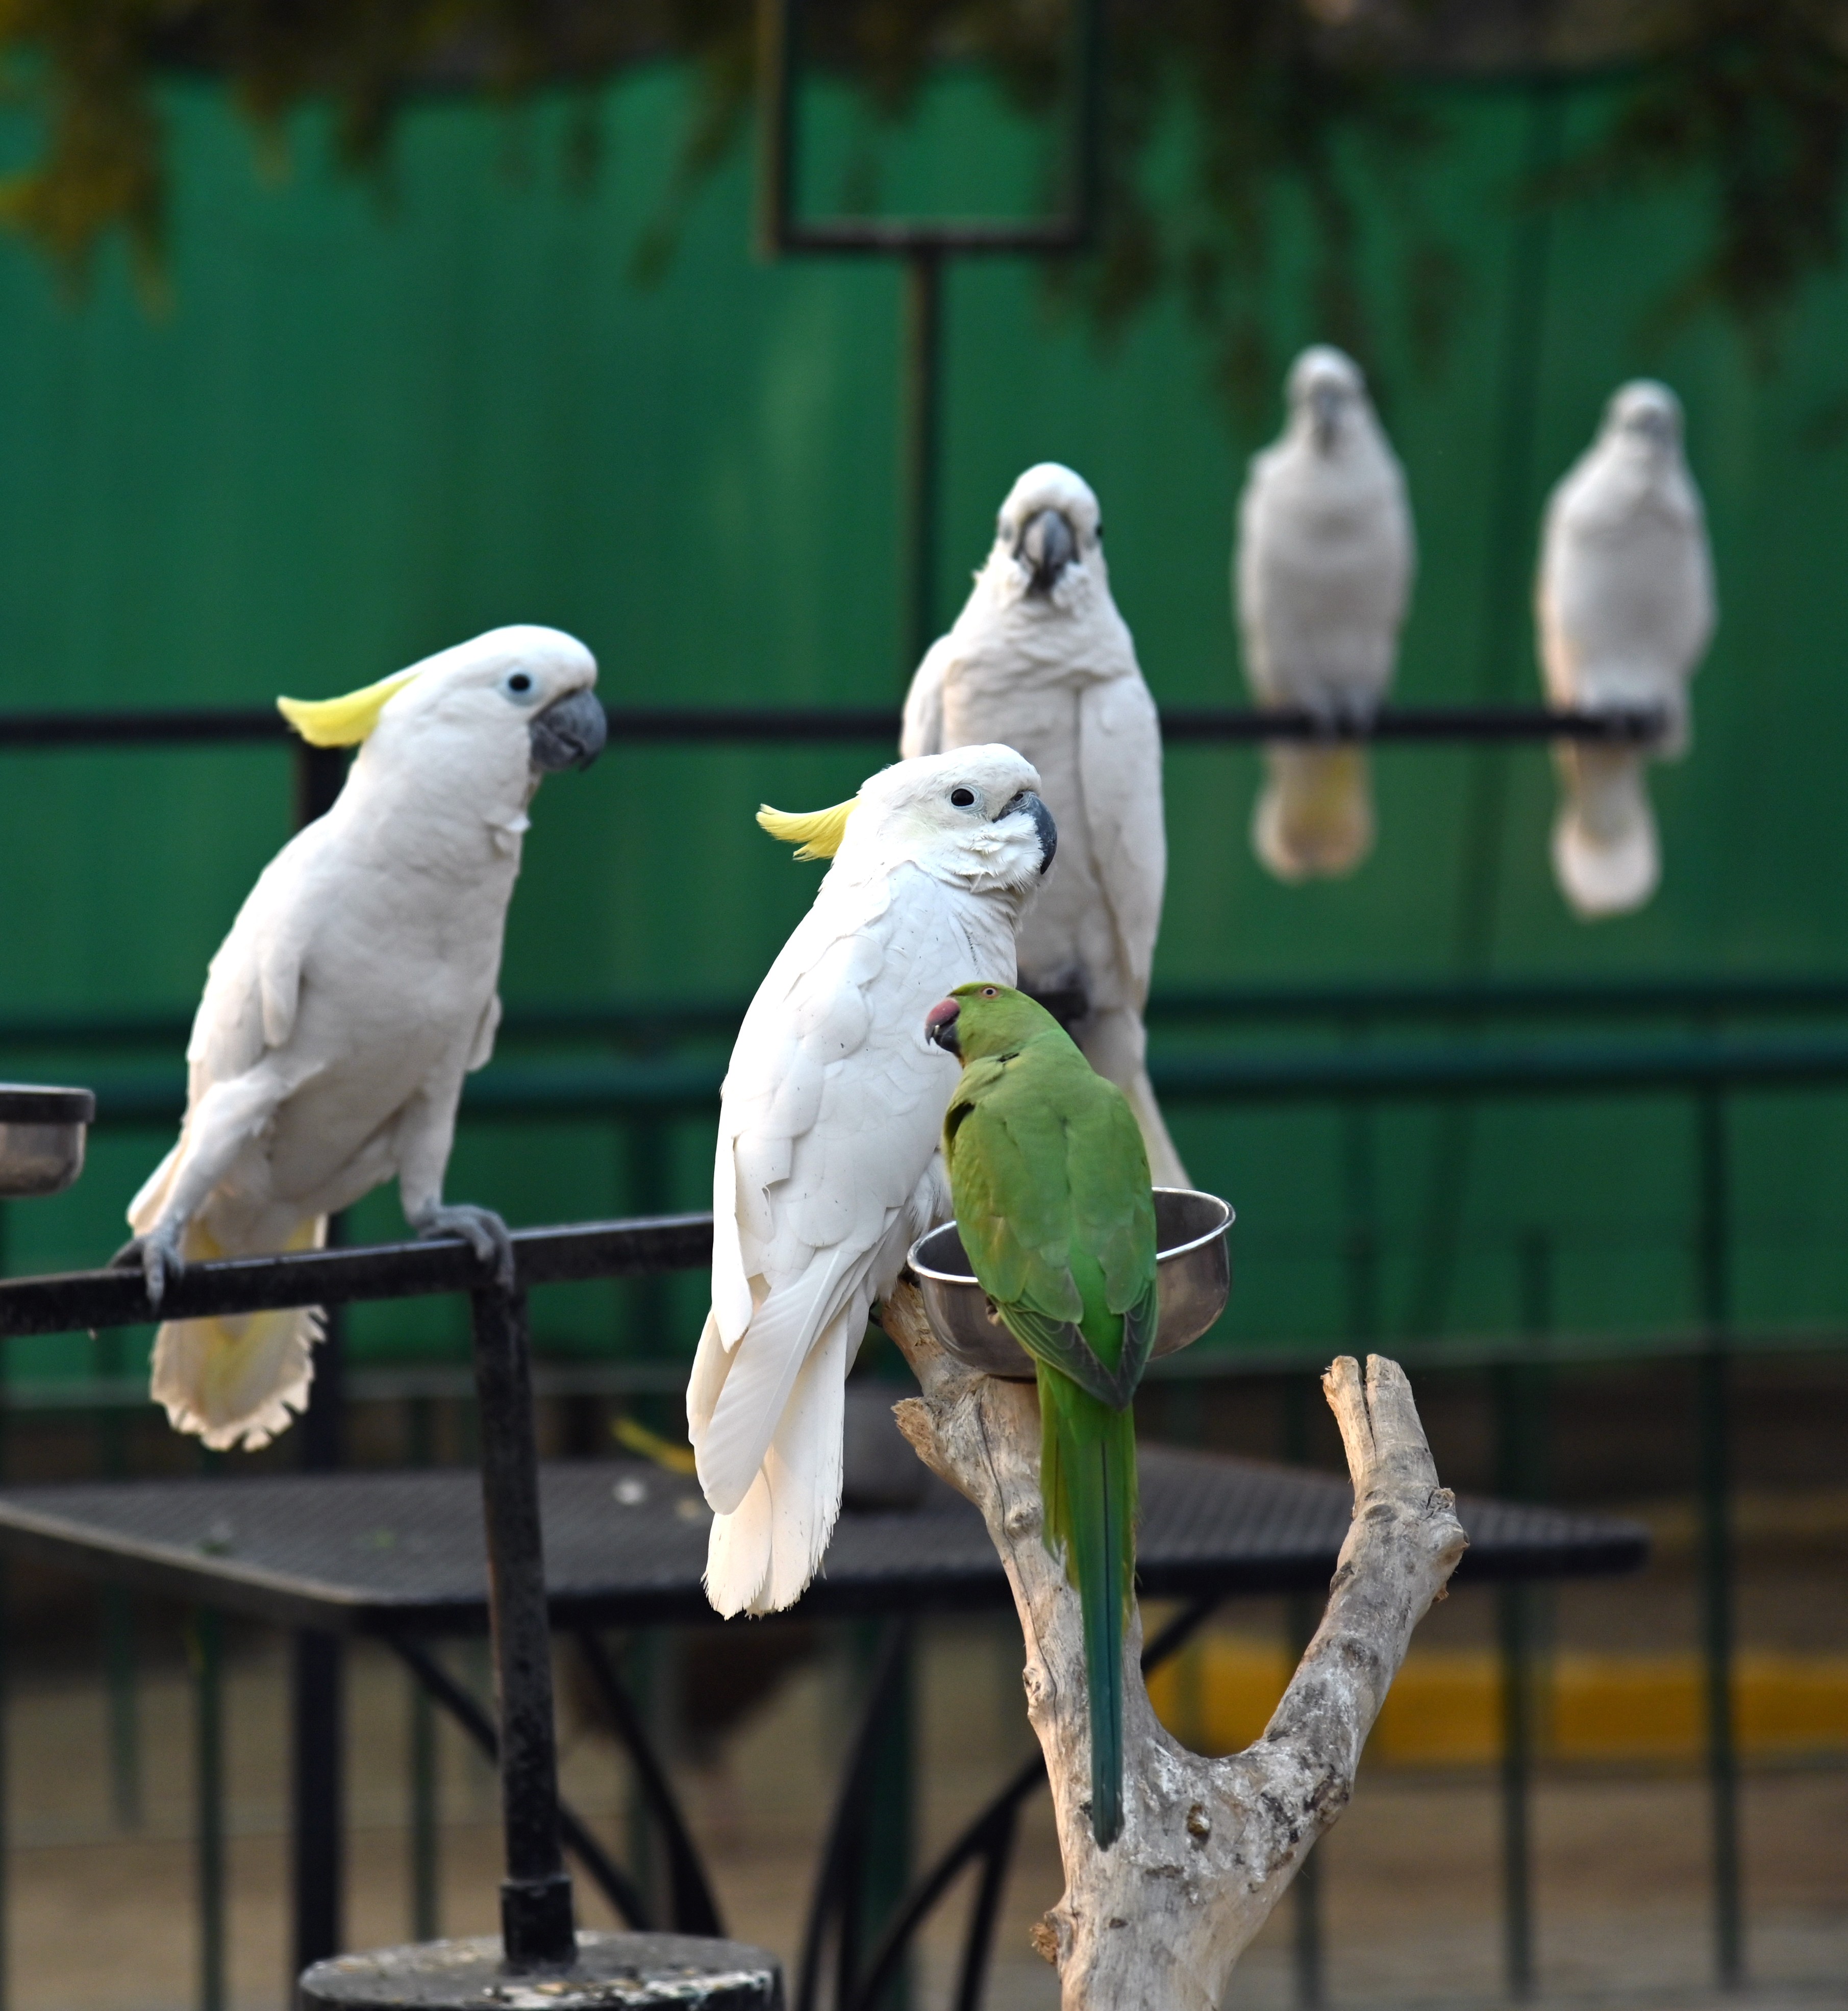 The White cockatoo also known as umbrella cockatoo